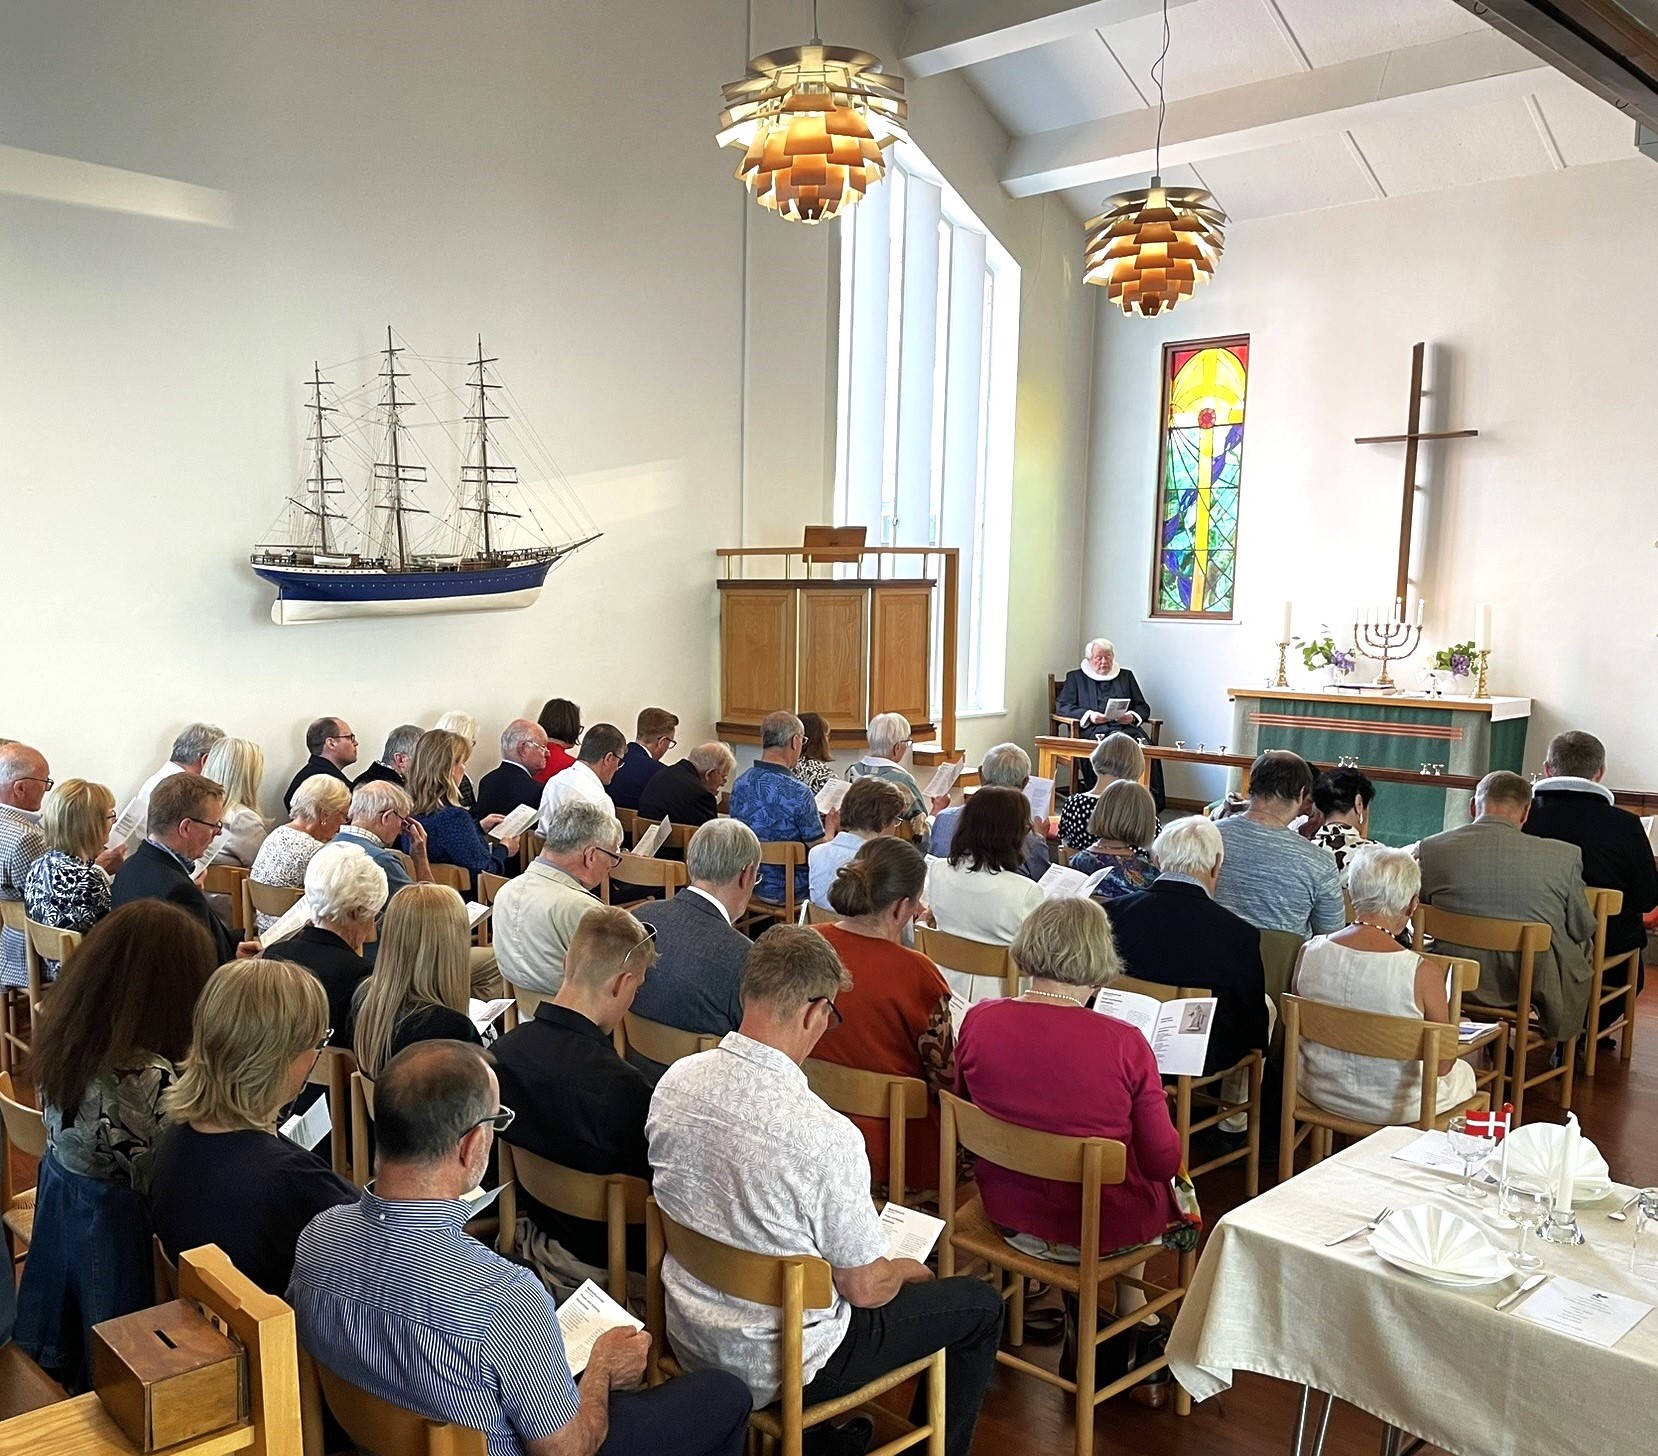 Three Celebrations And A Fairy Story At Historic Danish Church